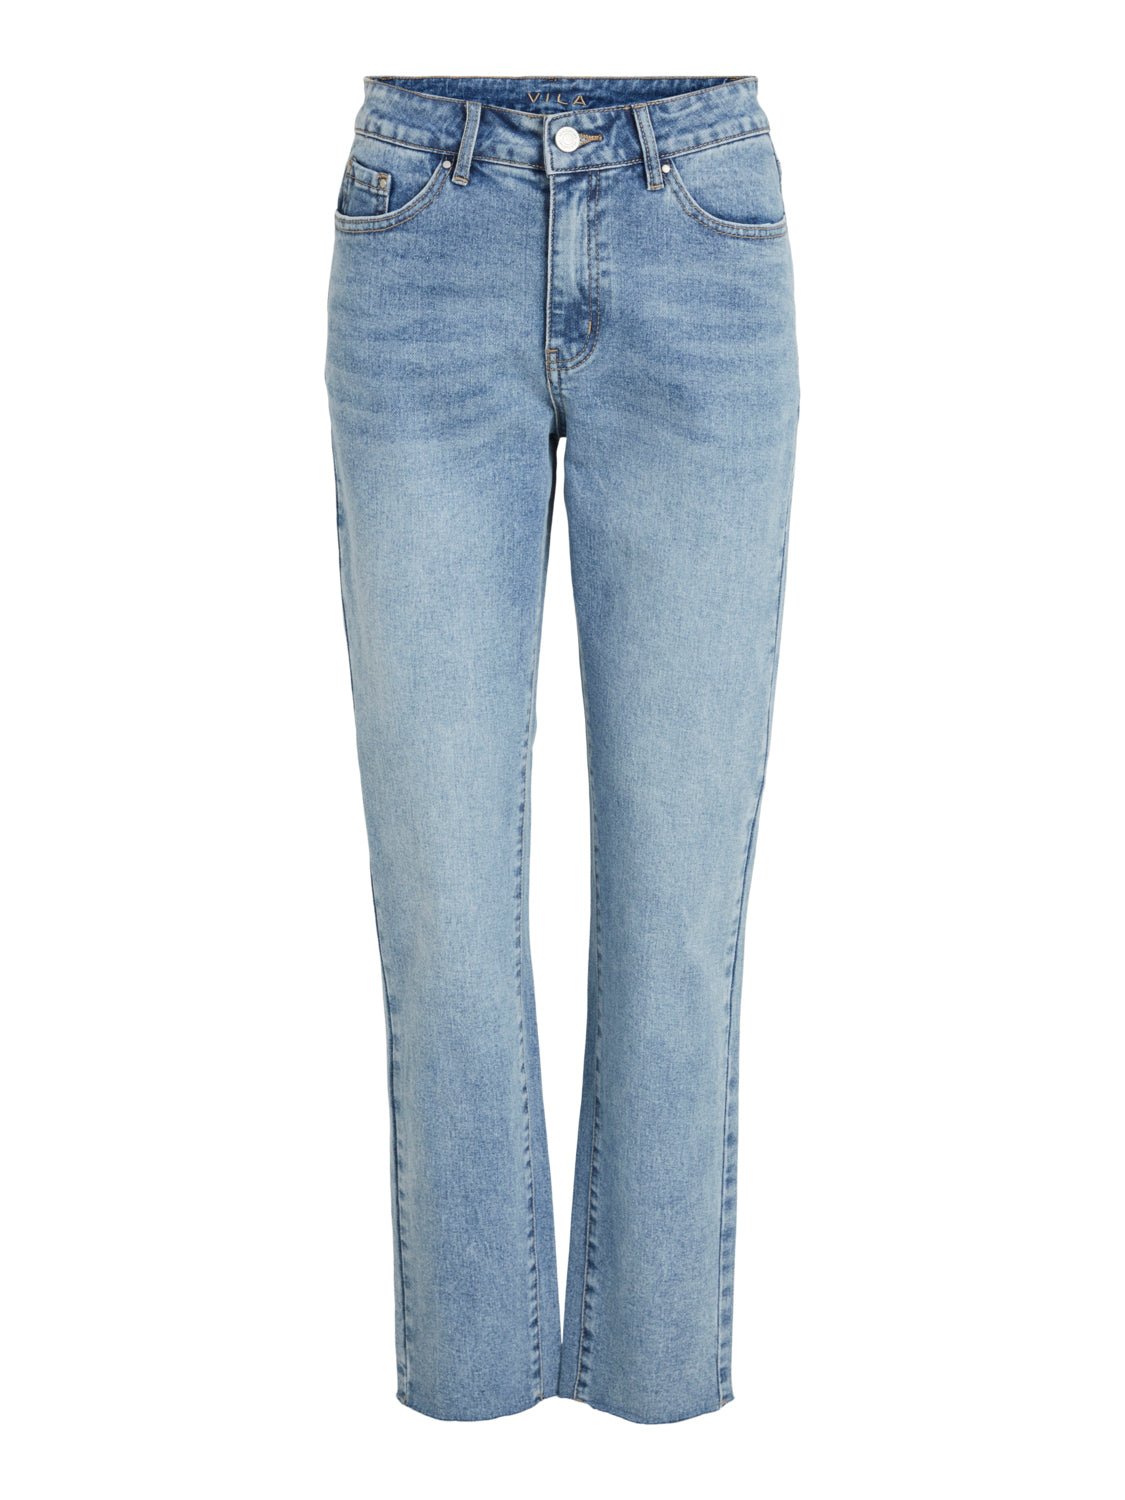 VISTRAY Jeans - Light Blue Denim